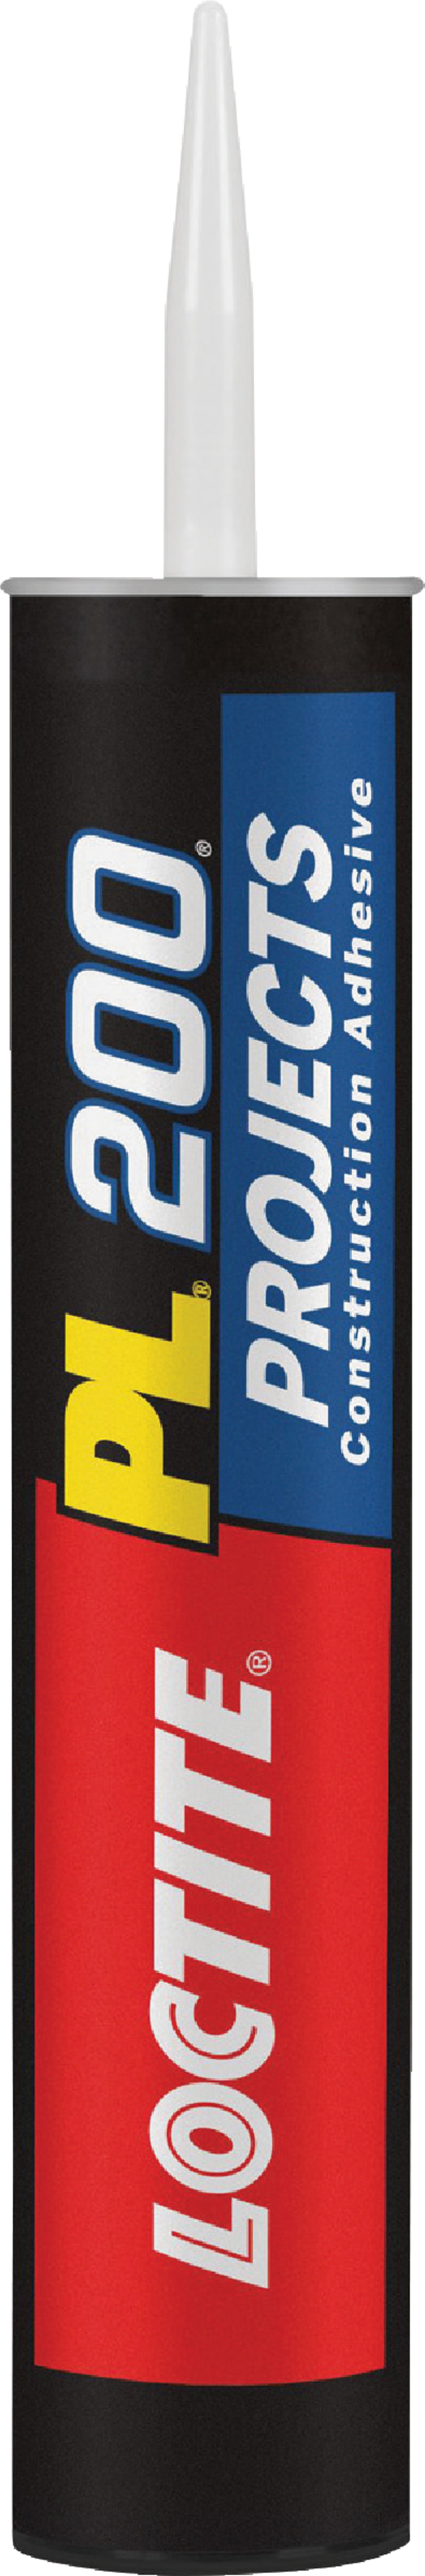 Loctite PL 300 10 oz. Foamboard Adhesive (4-Pack)